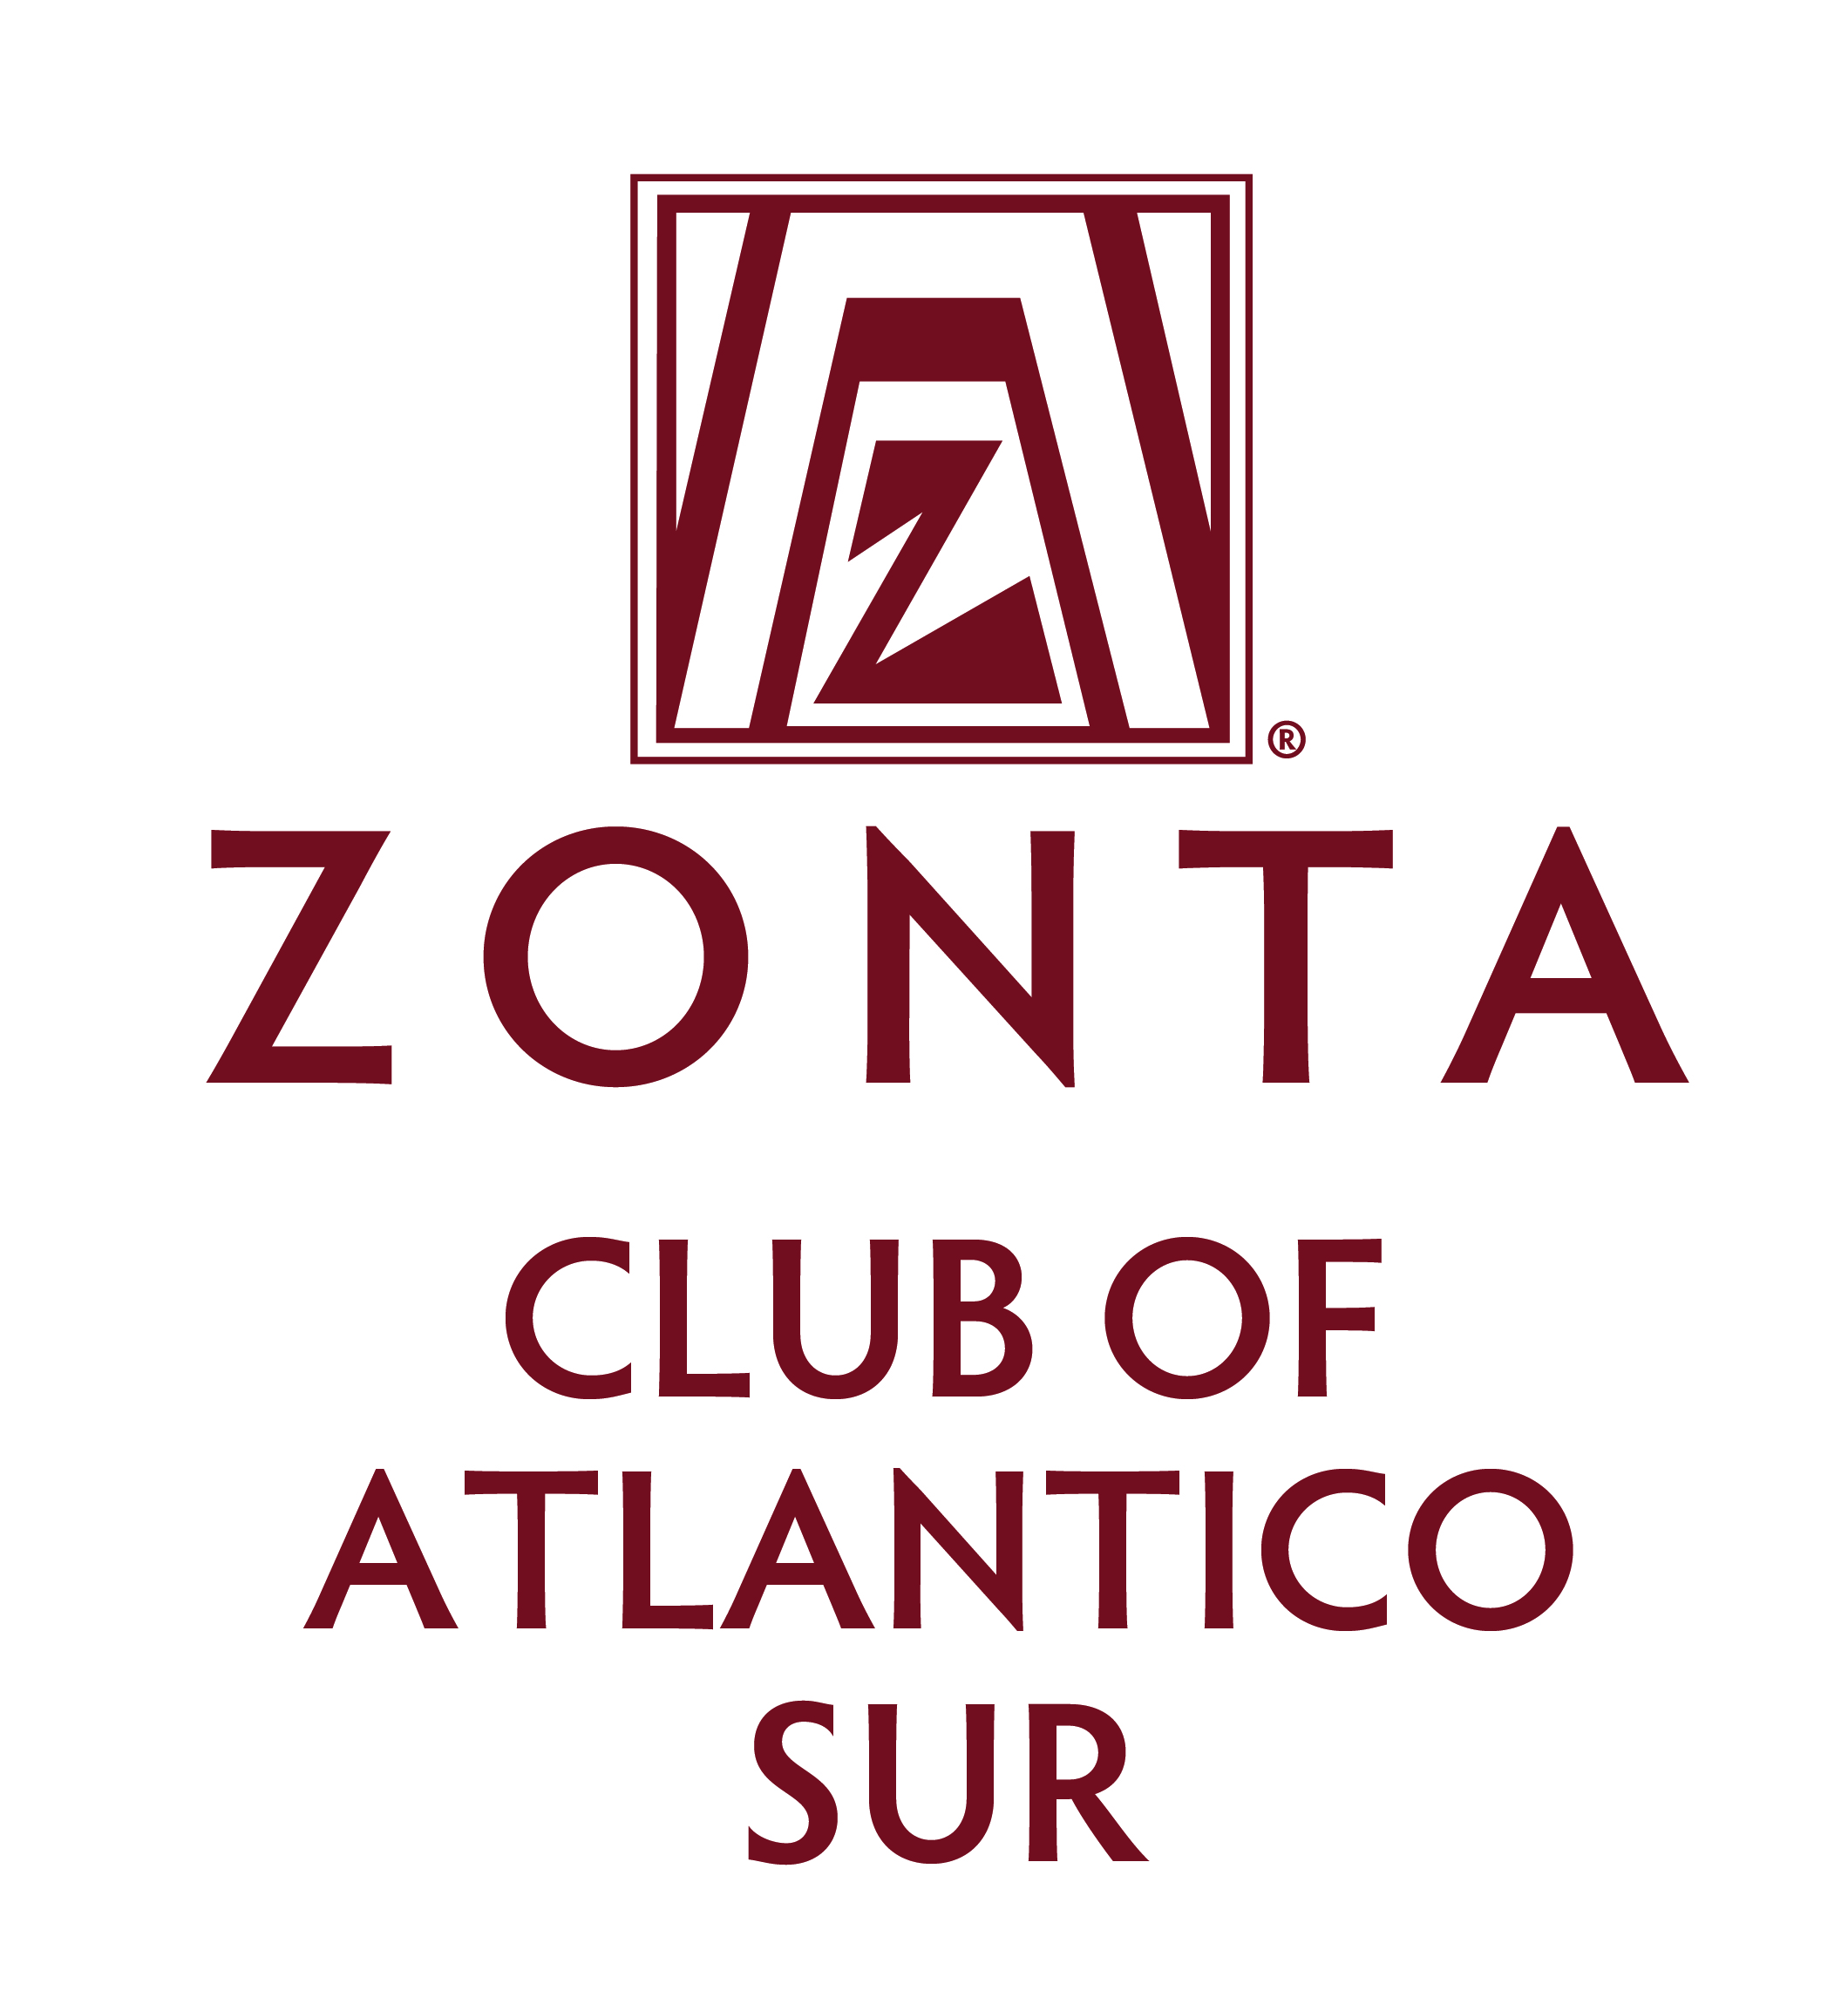 Zonta Club Atlántico Sur